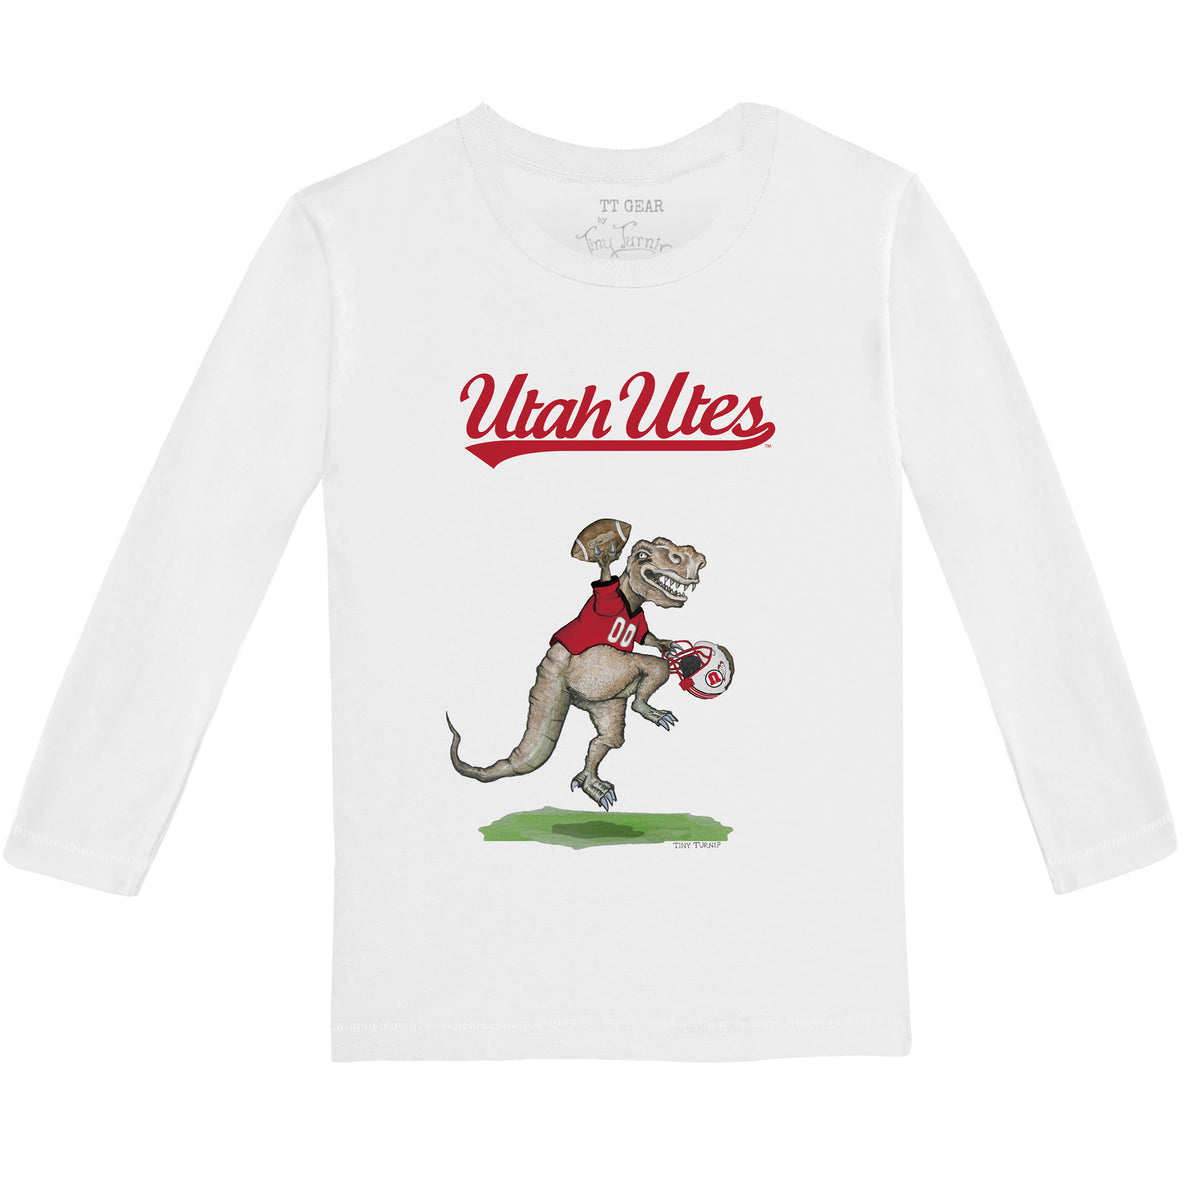 Utah Utes TT Rex Long-Sleeve Tee Shirt